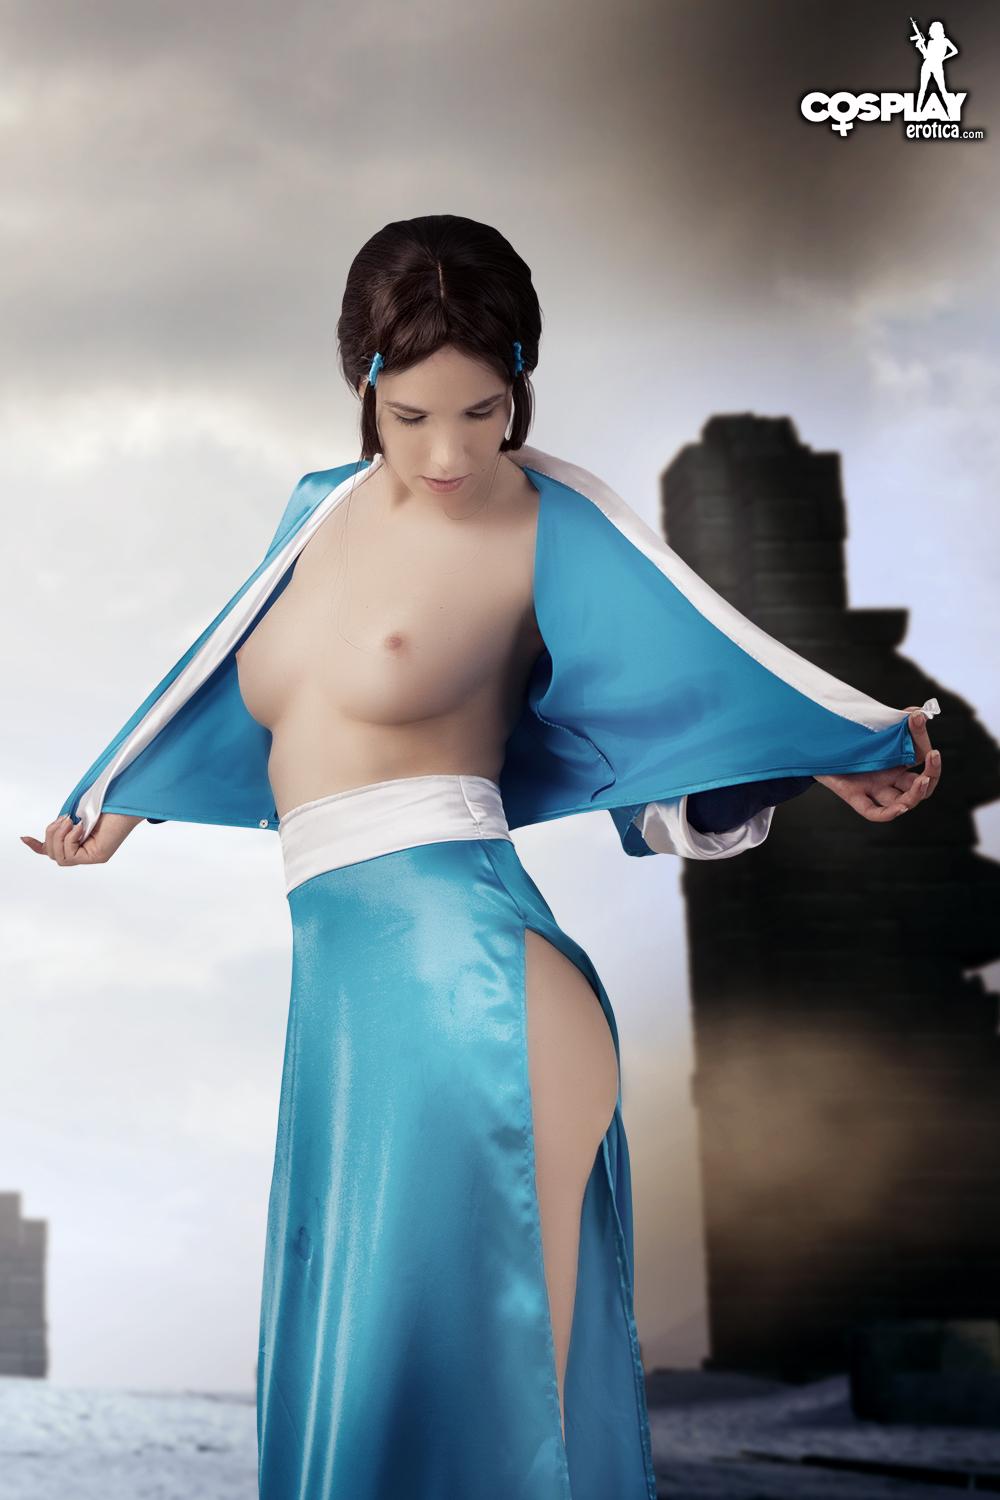 Avatar Cosplay Porn - Katara Undresses in These Smoking Hot NSFW Cosplay Photos â€“ Page 2 â€“ Nerd  Porn!